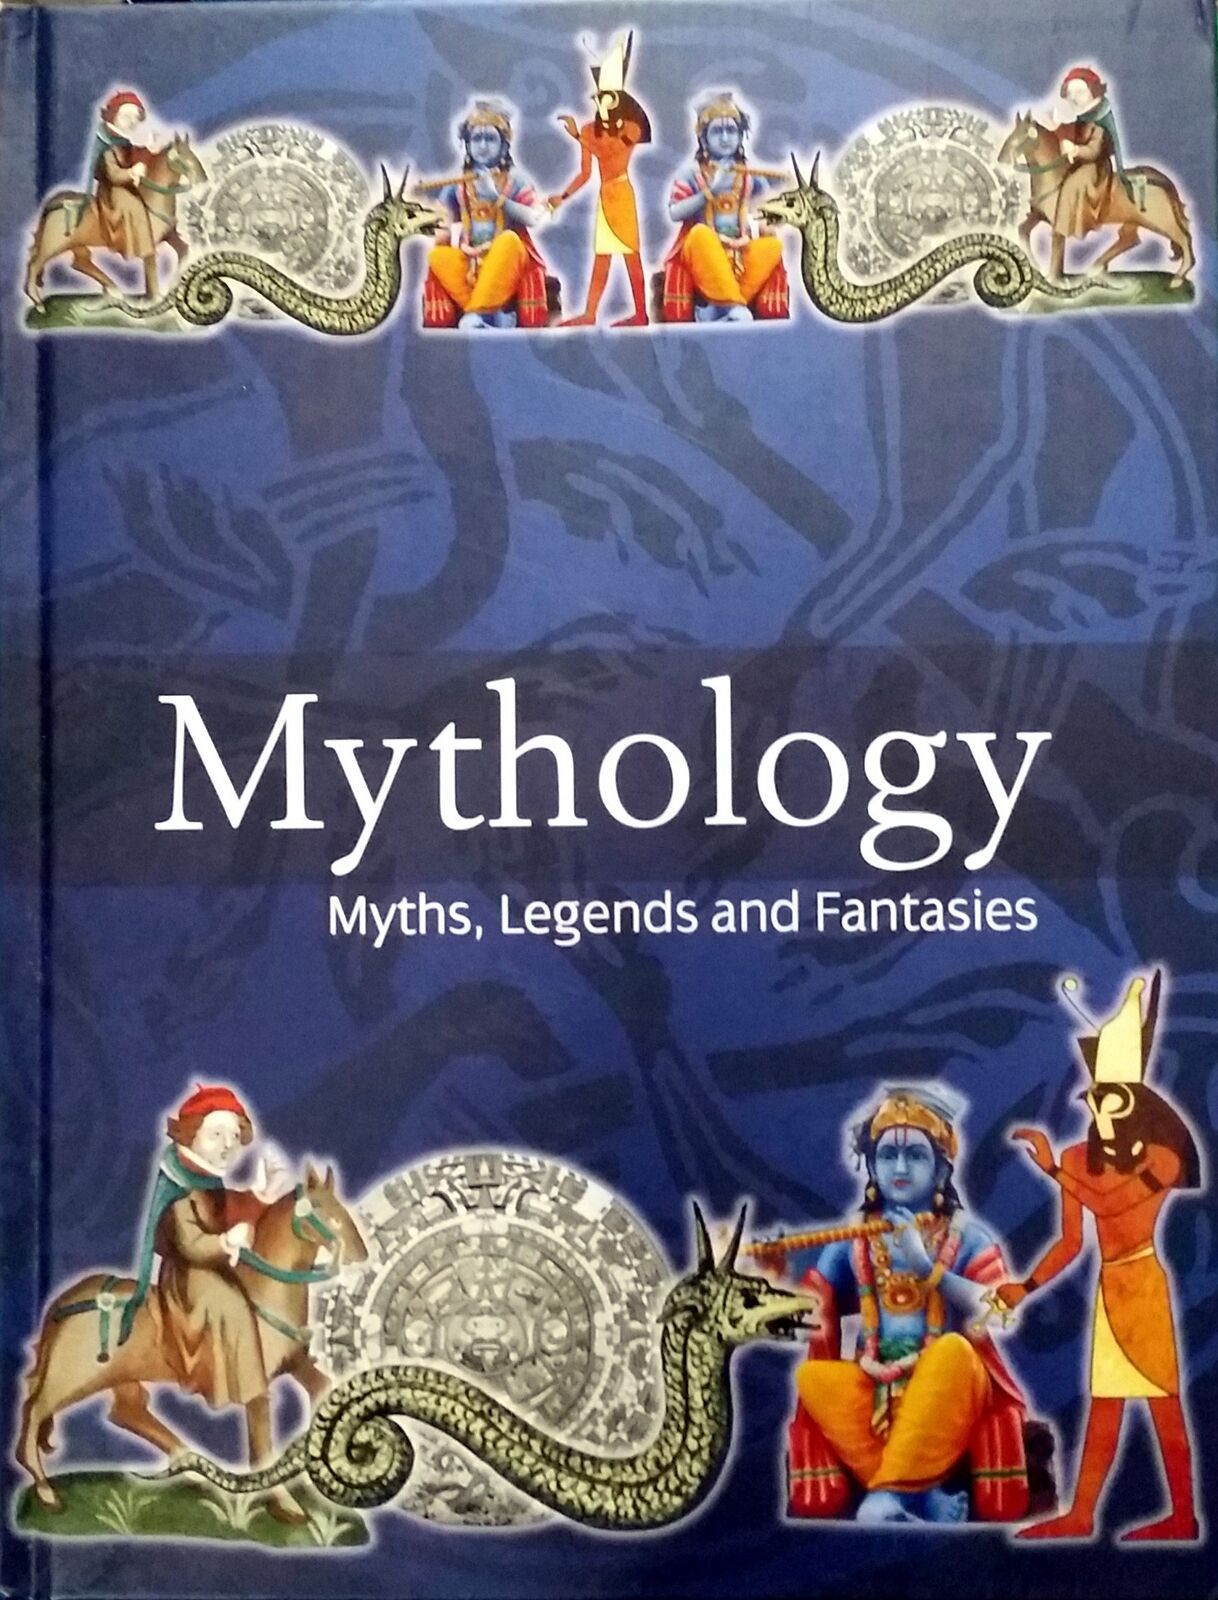 Mythology: Myths, Legends and Fantasies Hardcover Good